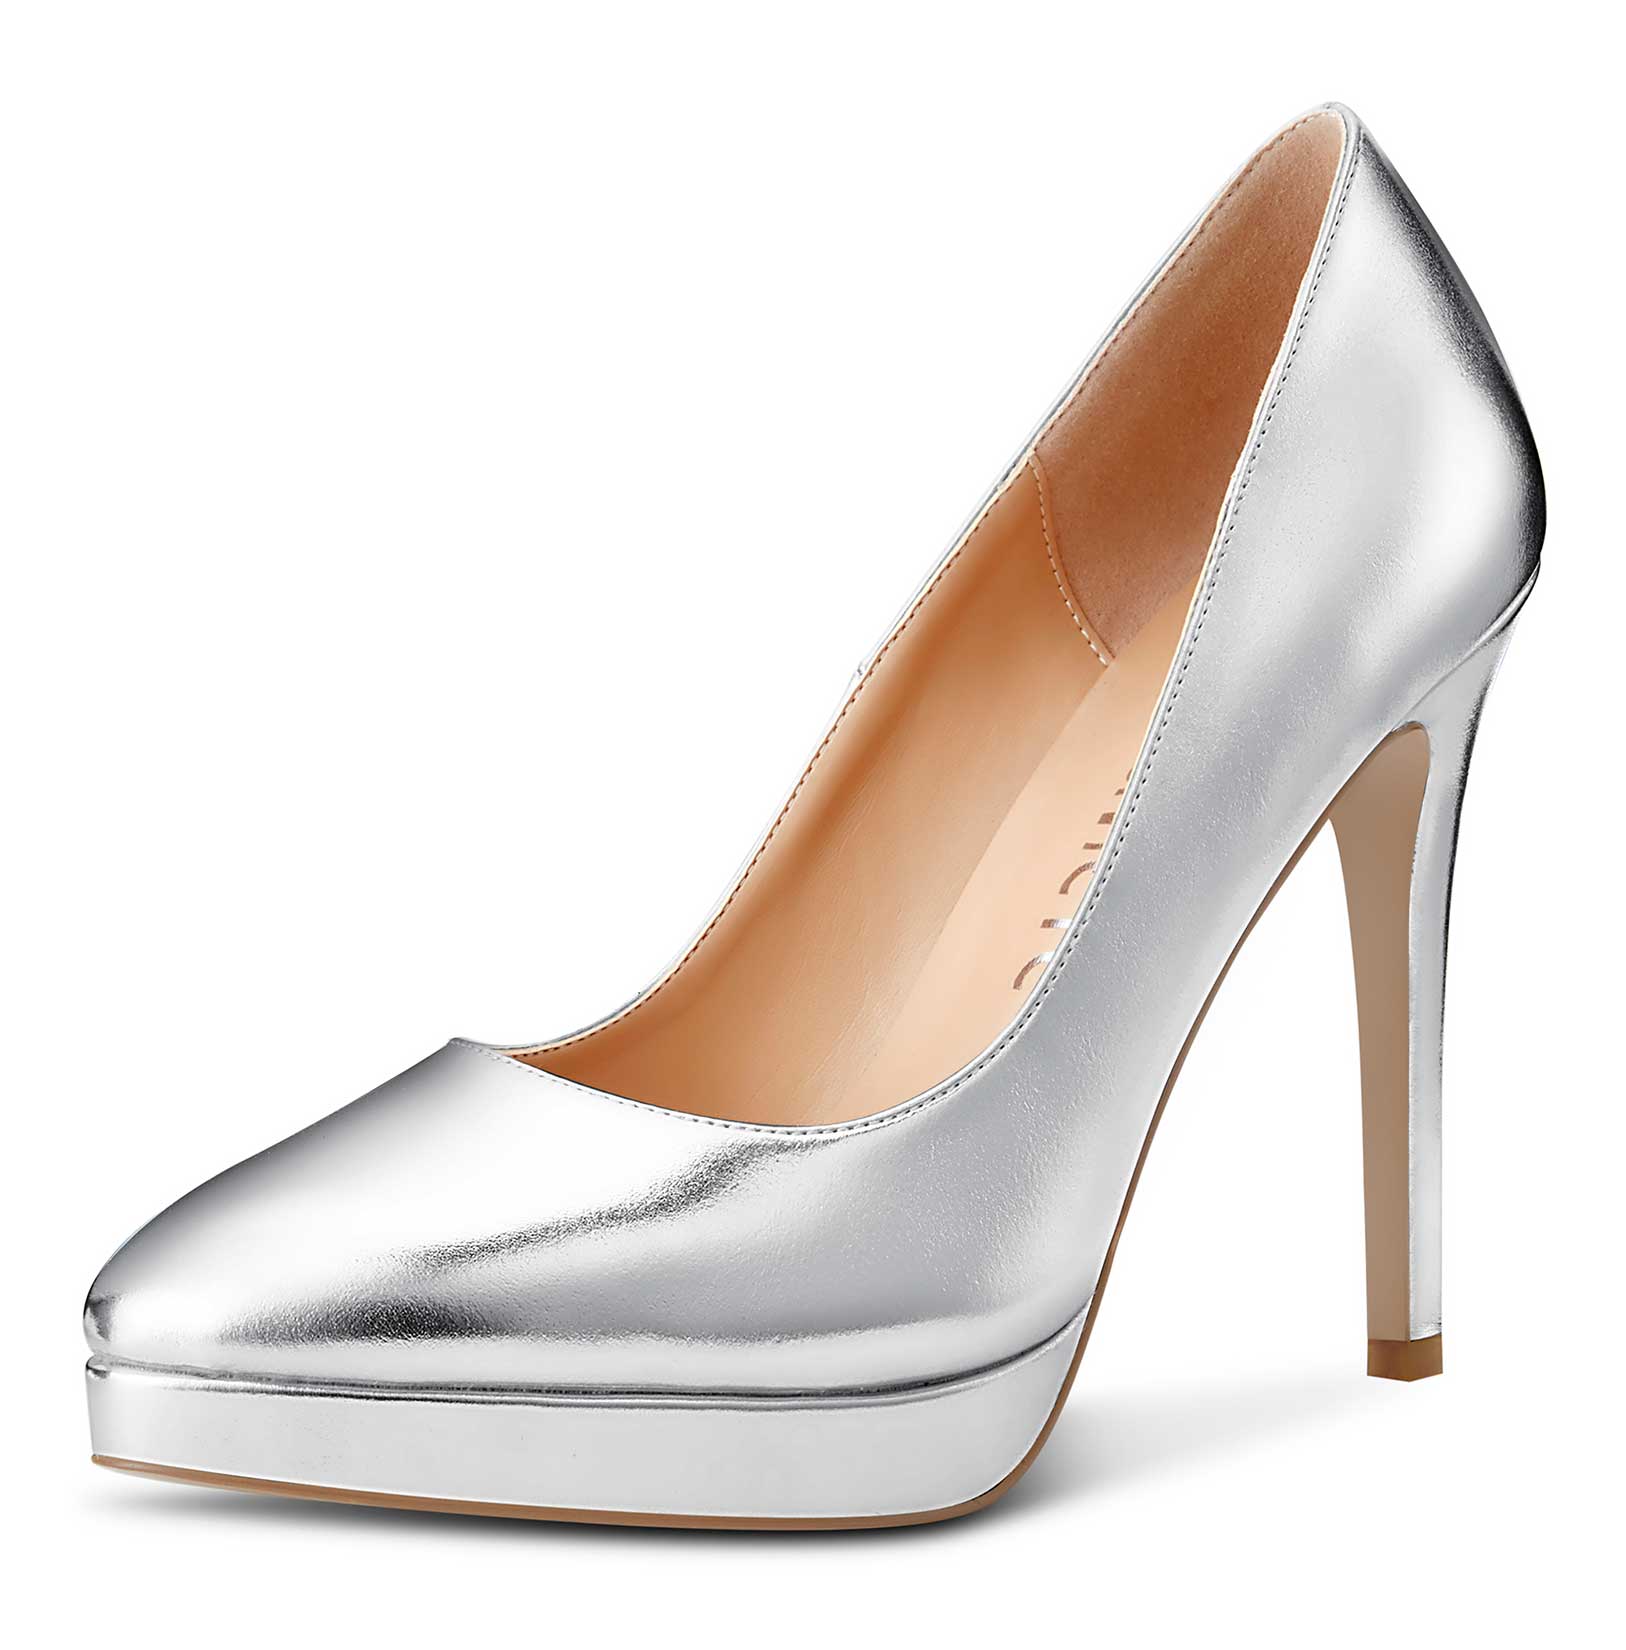 ASOS DESIGN Salary mid heeled pumps in silver | ASOS